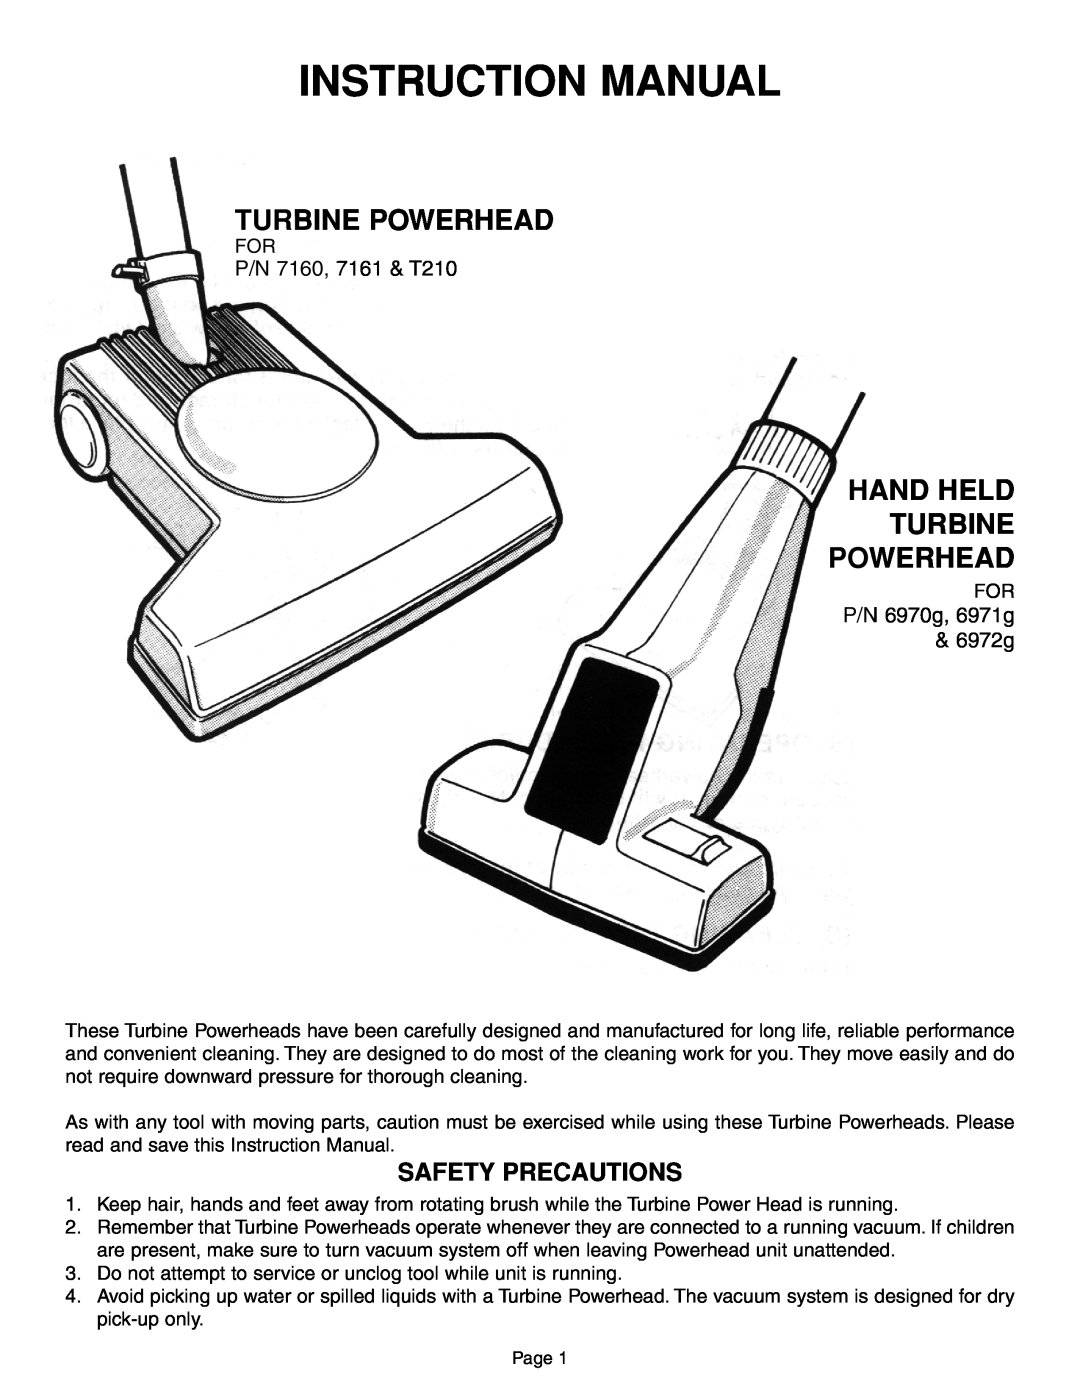 H-P Products TURBINE POWERHEAD and HAND HELD TURBINE POWERHEAD instruction manual Safety Precautions, Turbine Powerhead 